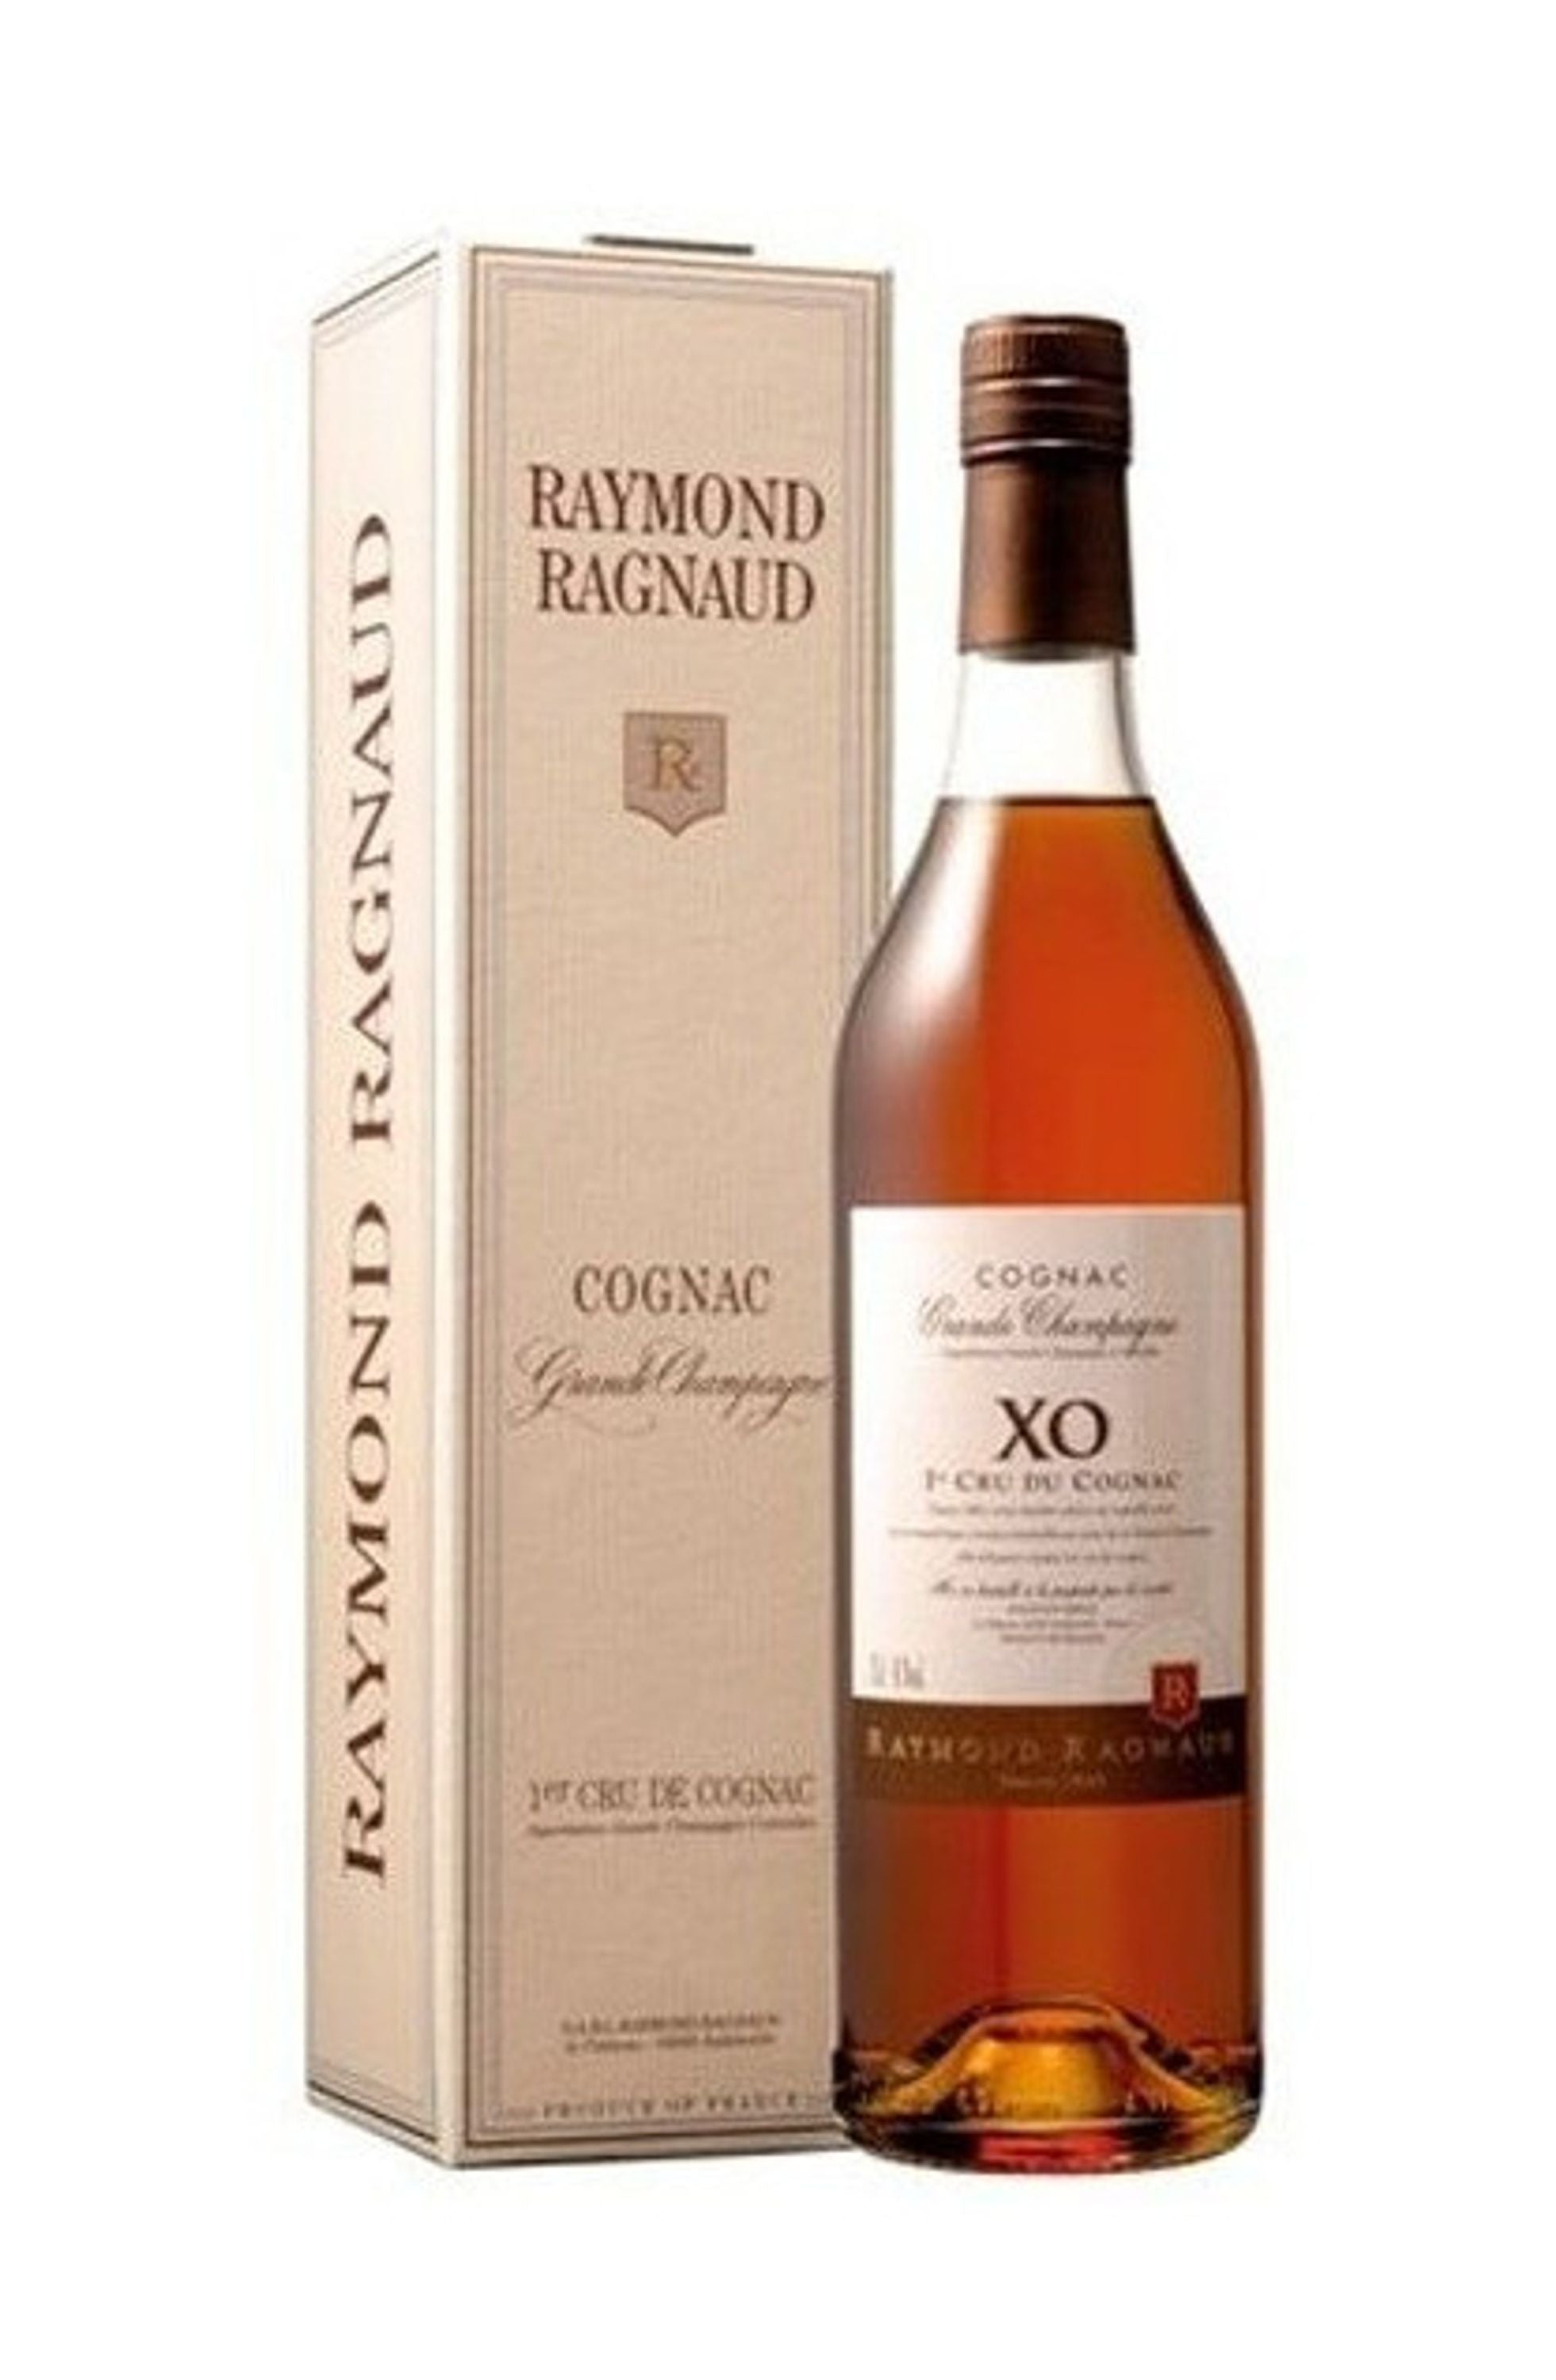 Raymond Ragnaud XO Cognac Grande Champagne 0.7l, alc. 42% by volume, Cognac France